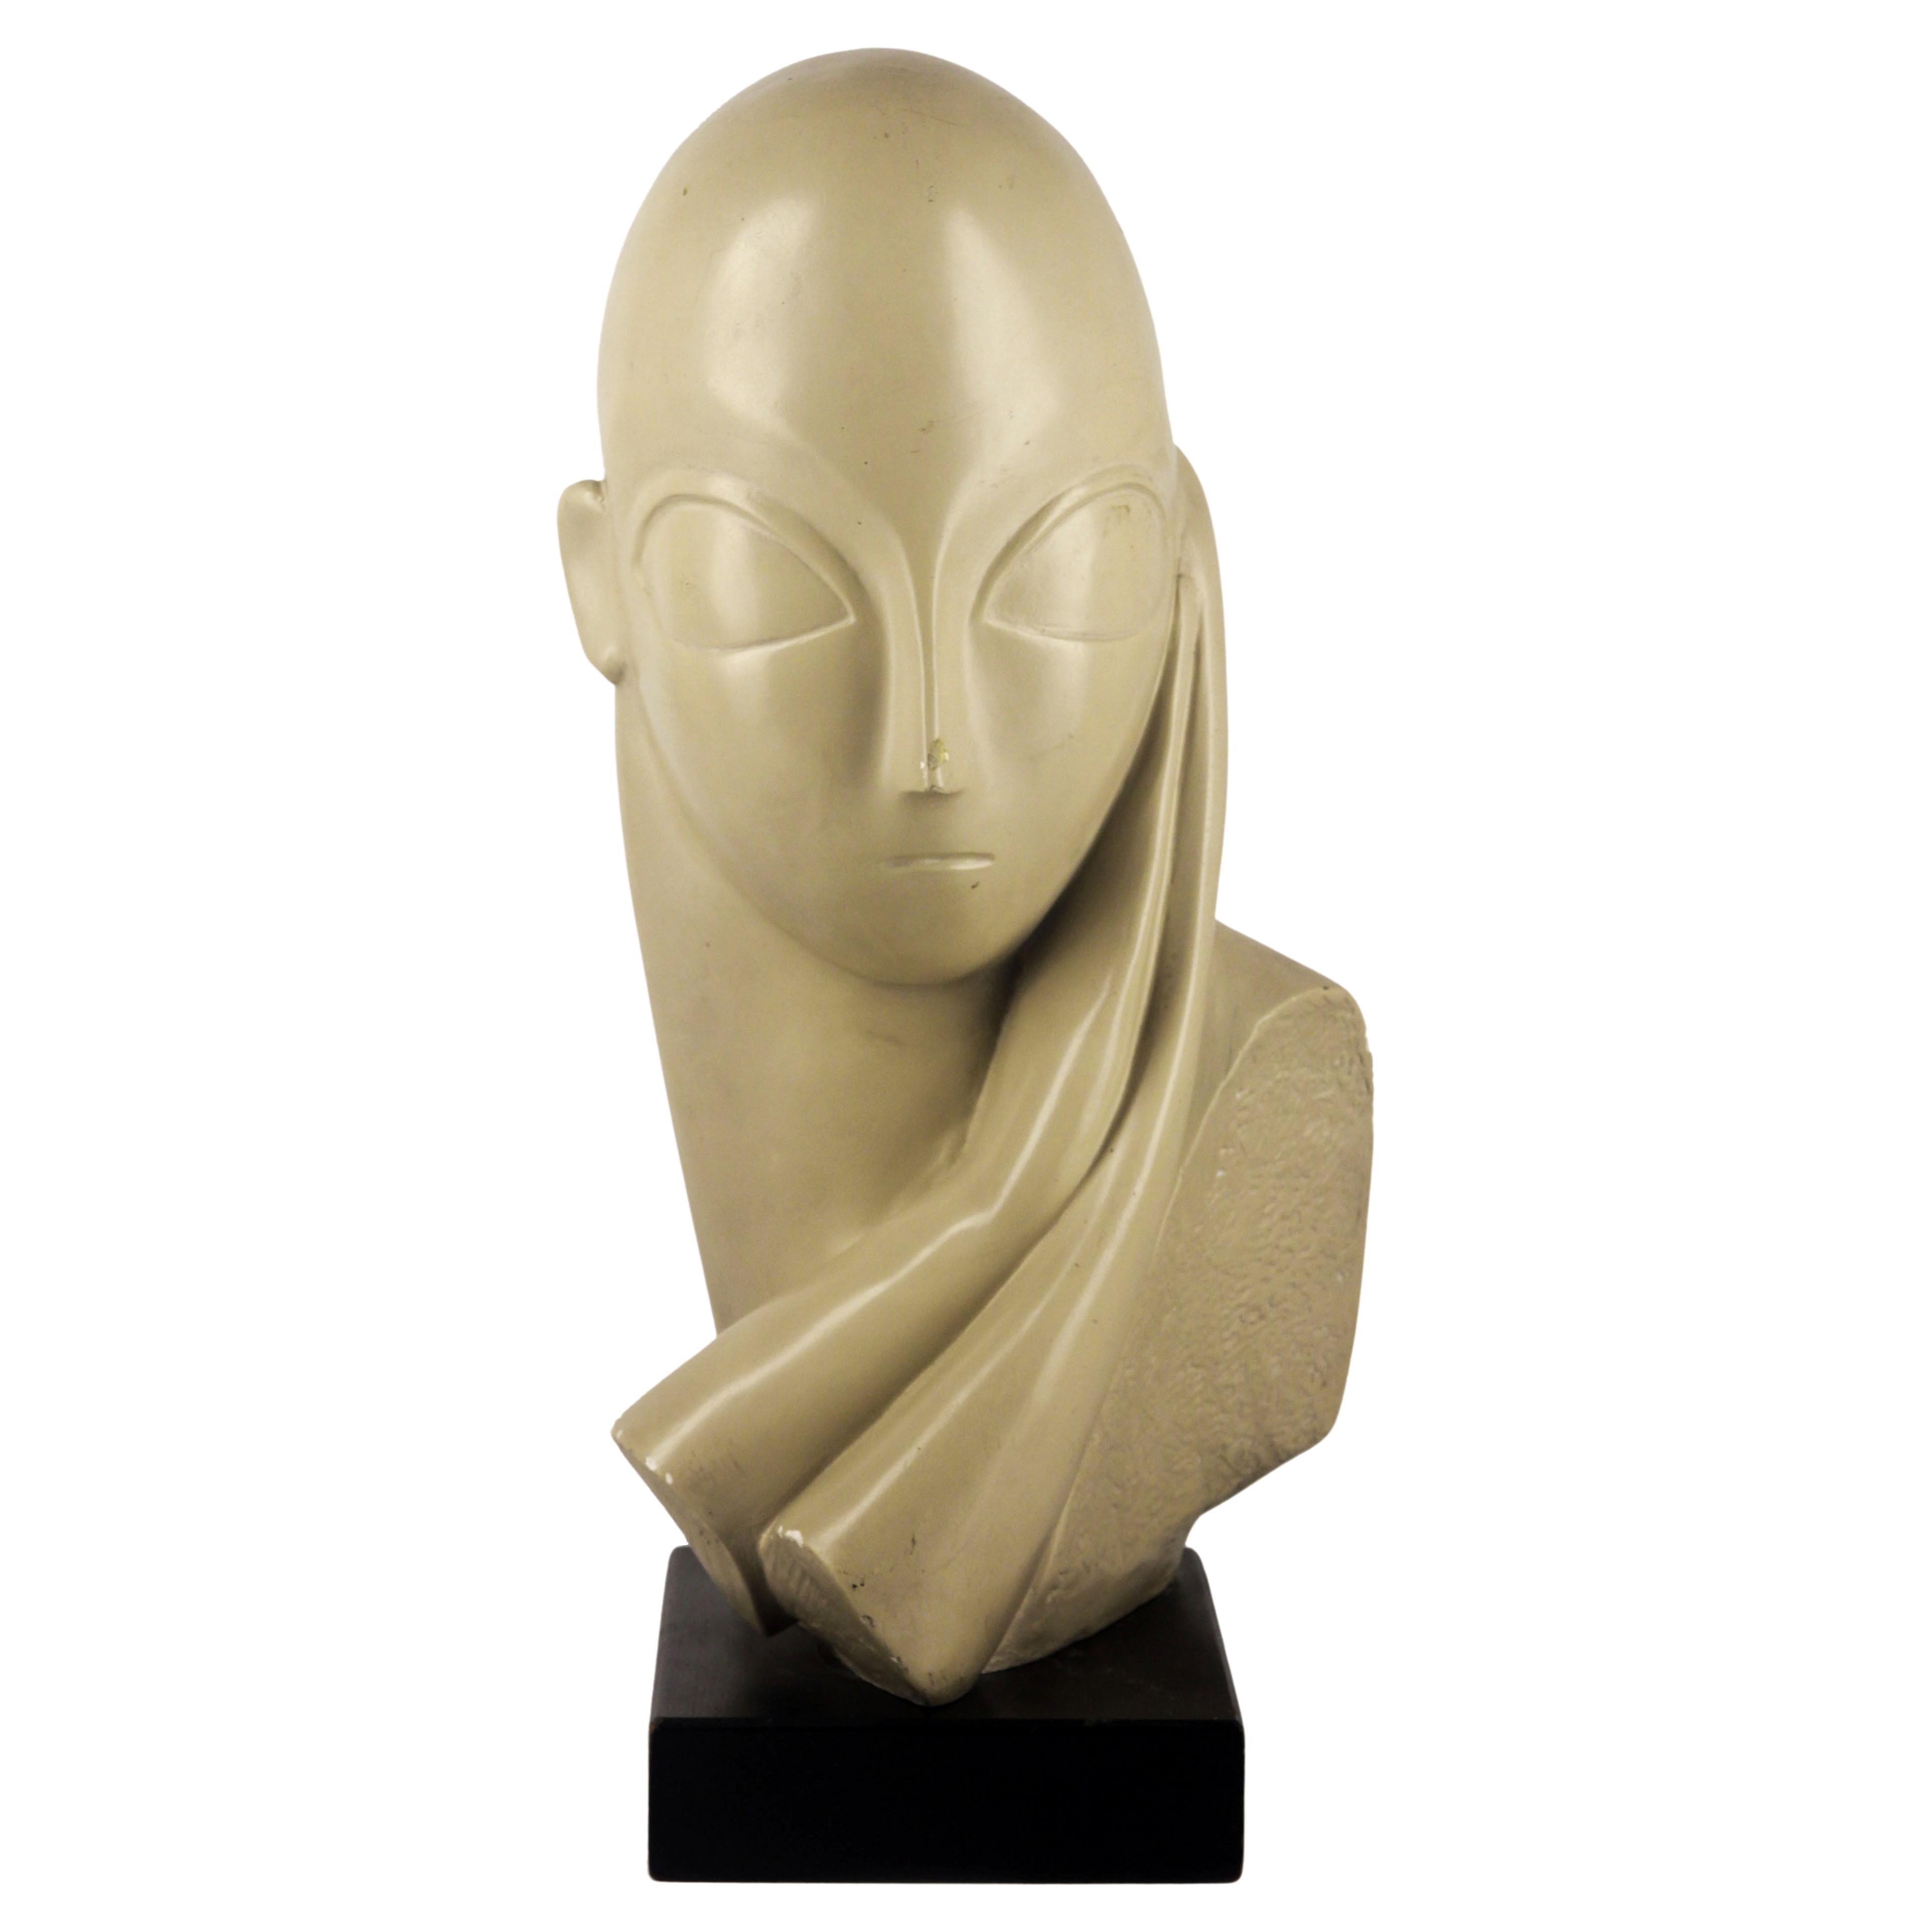 Austin Prod's Plaster Sculpture/Bust Based on 'Mademoiselle Pogany' by Brâncuşi For Sale